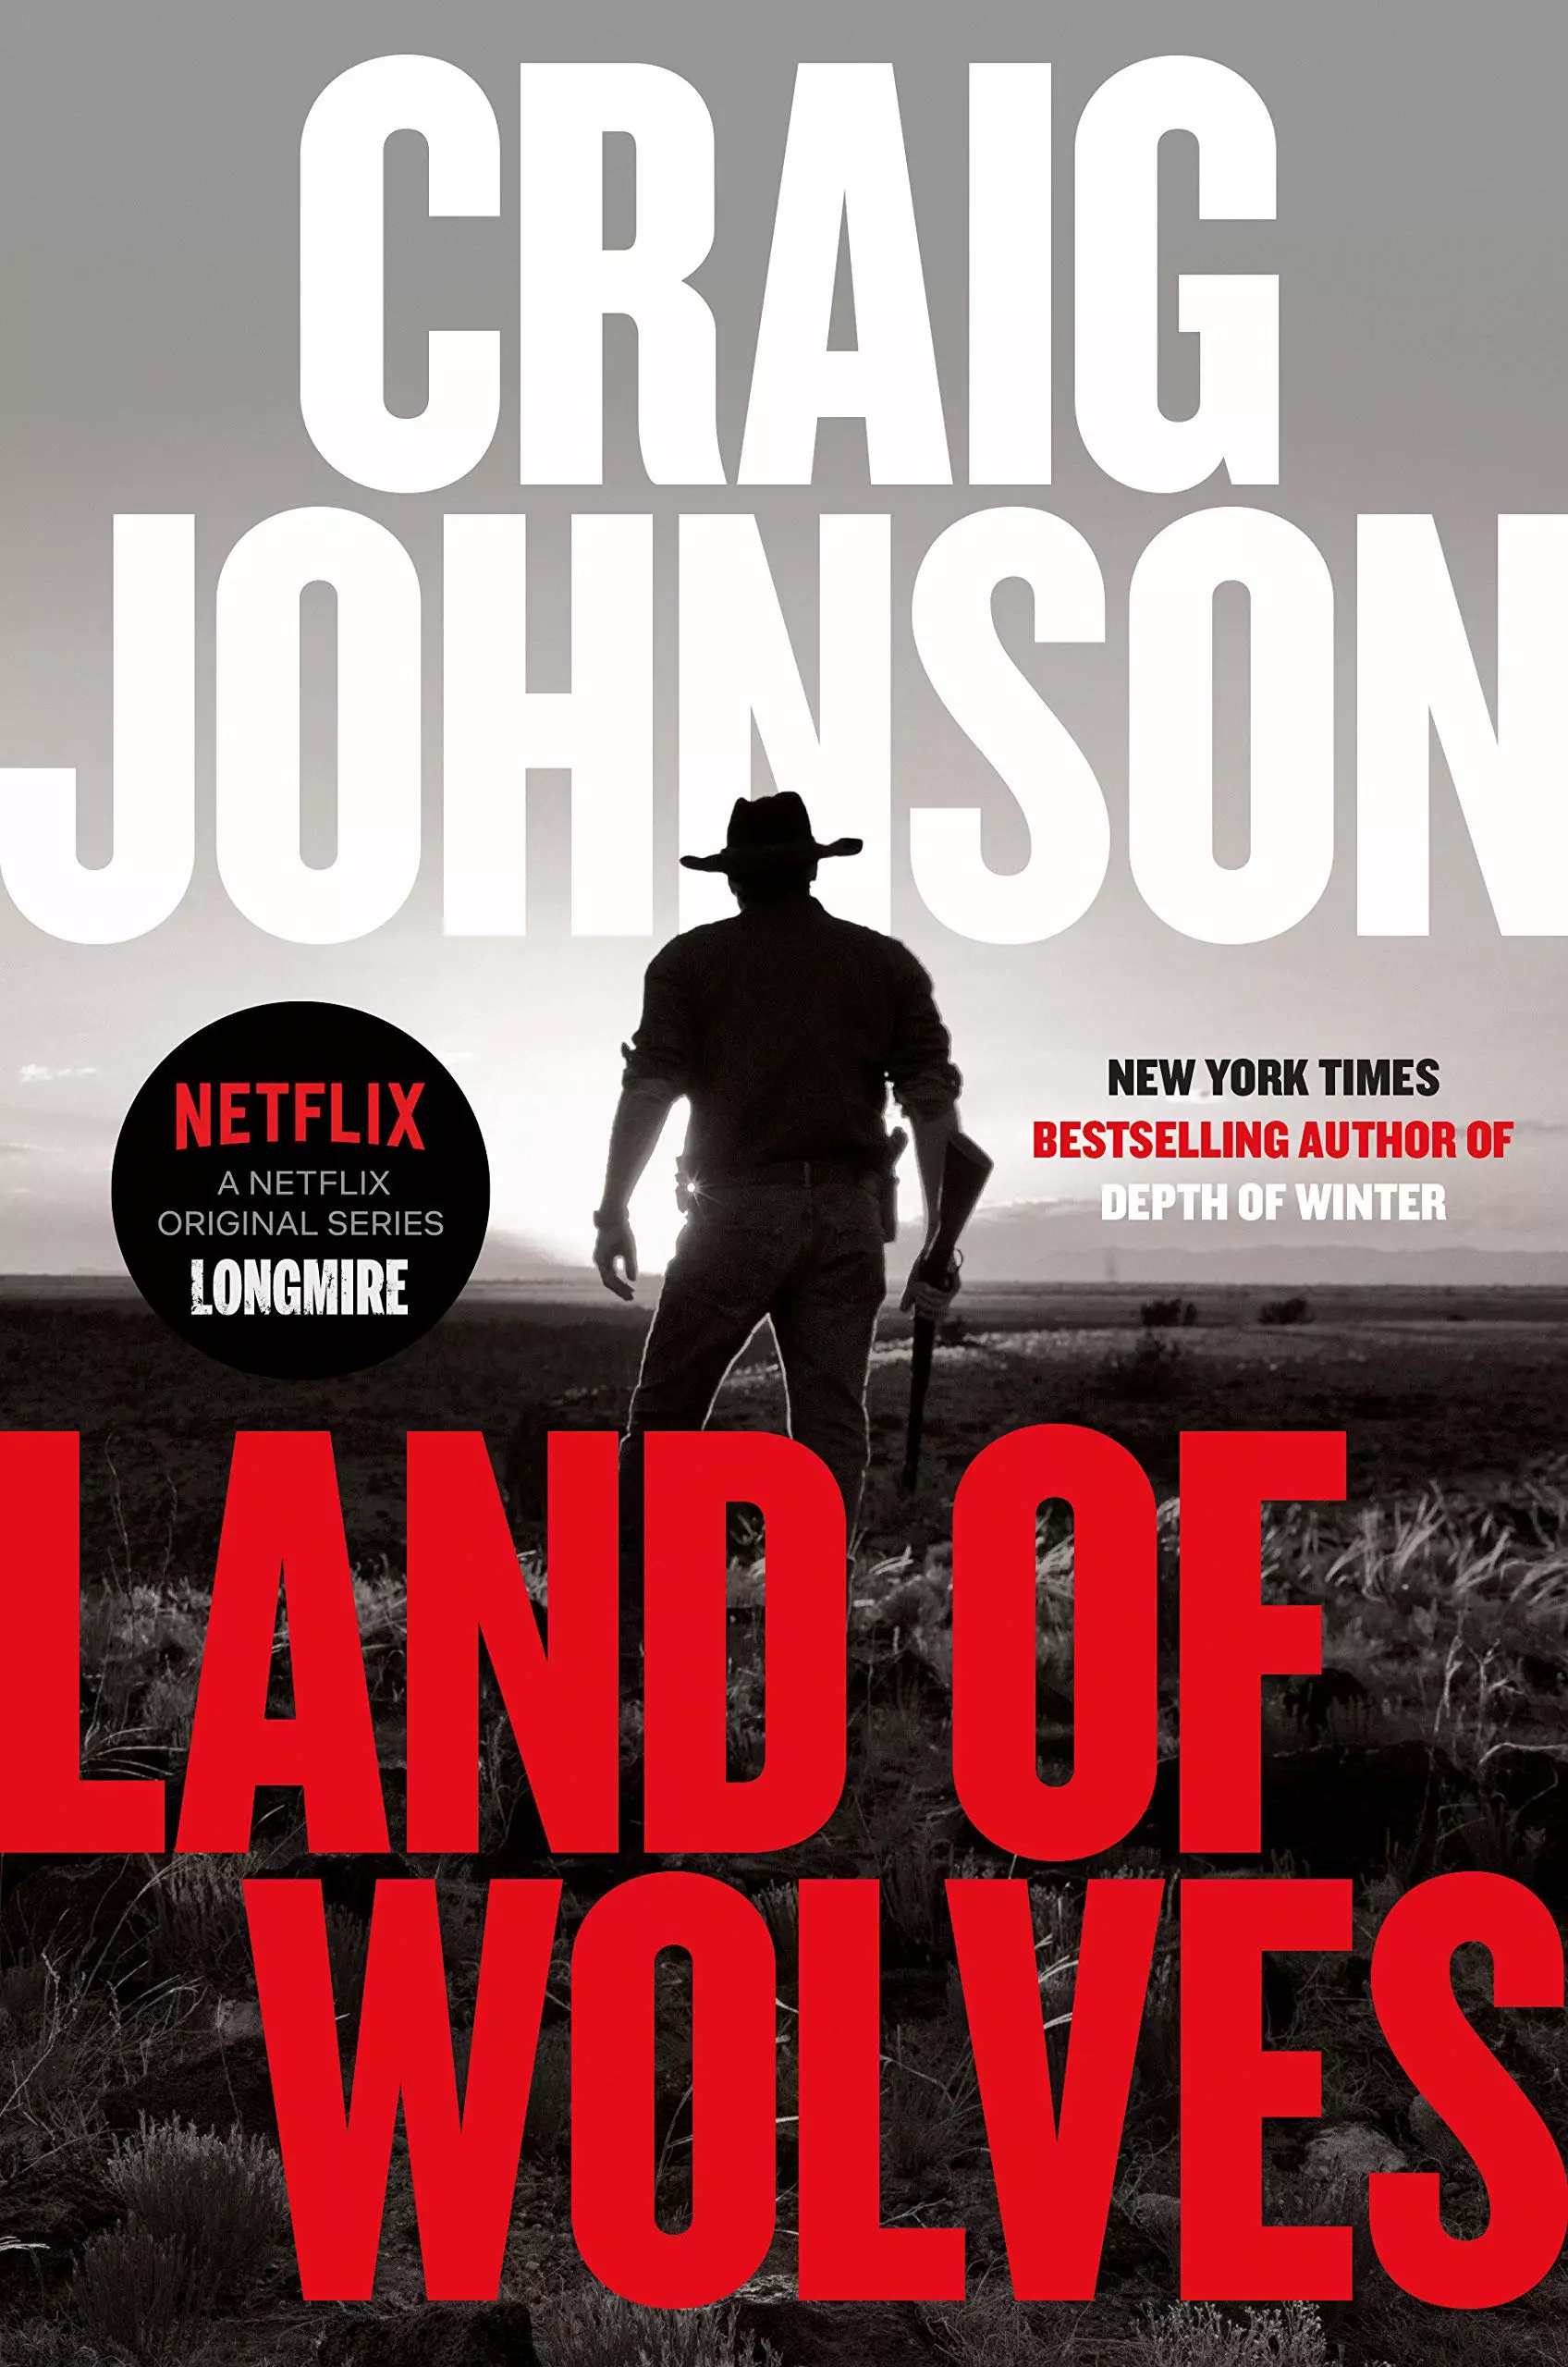 Land Of Wolves, Johnson's twenty first book